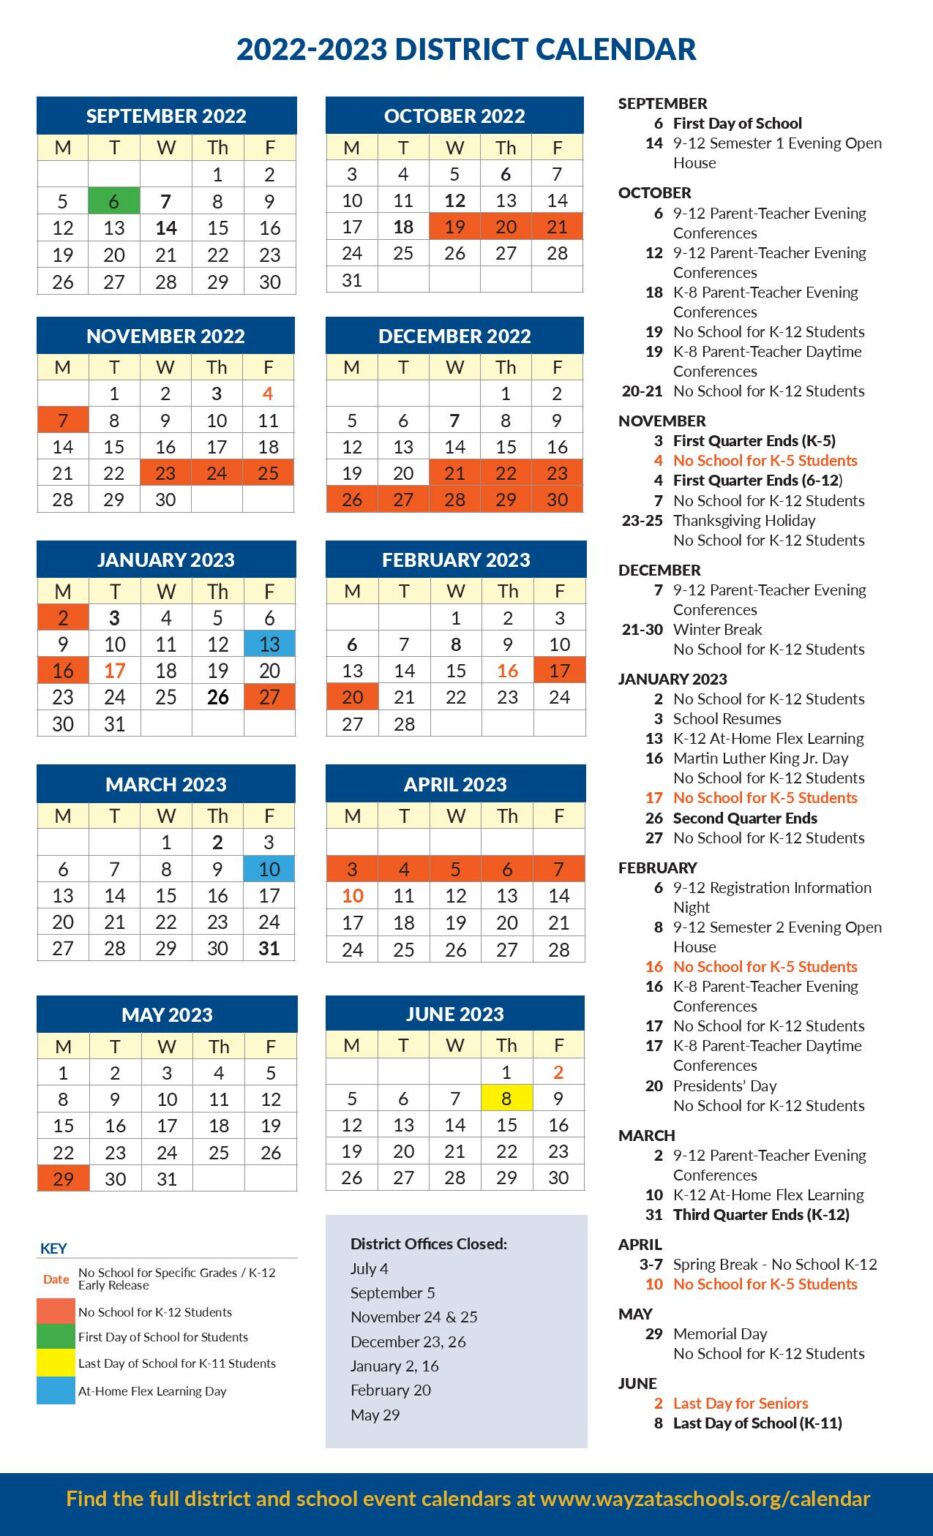 Wayzata Public Schools Calendar 2022-2023 in PDF